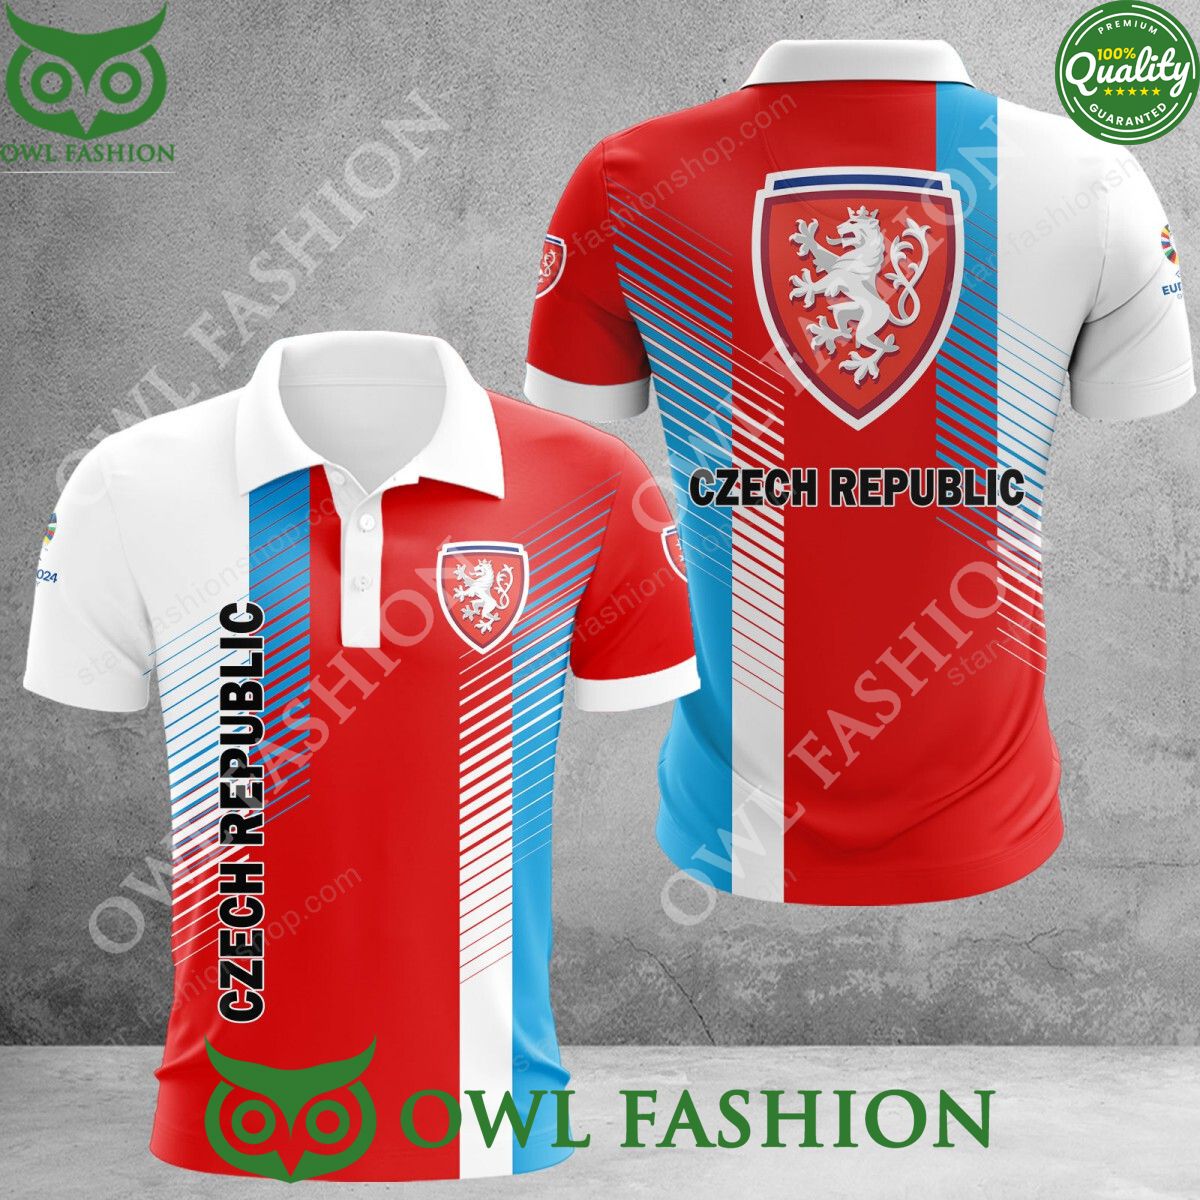 Czech Republic Ceská fotbalová reprezentace National Football Team Polo Shirt